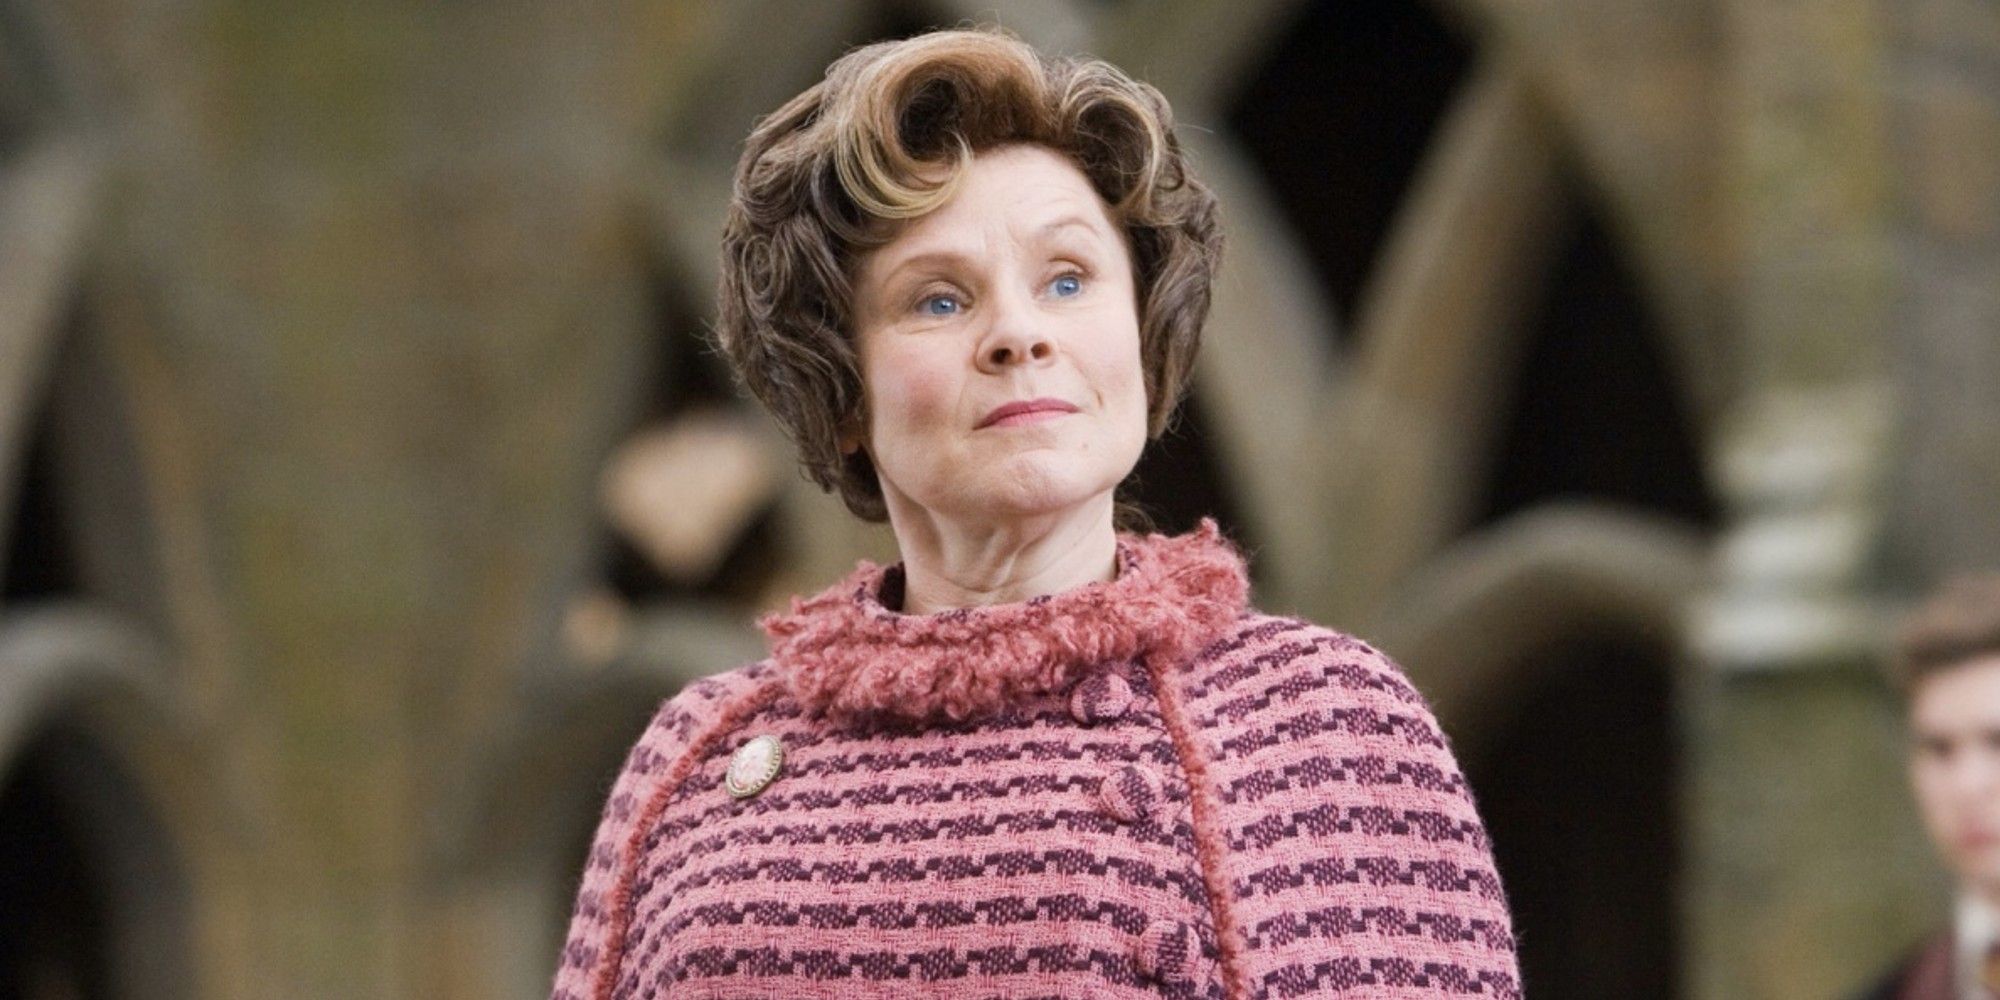 Imelda Staunton as Dolores Umbridge in 'Harry Potter'